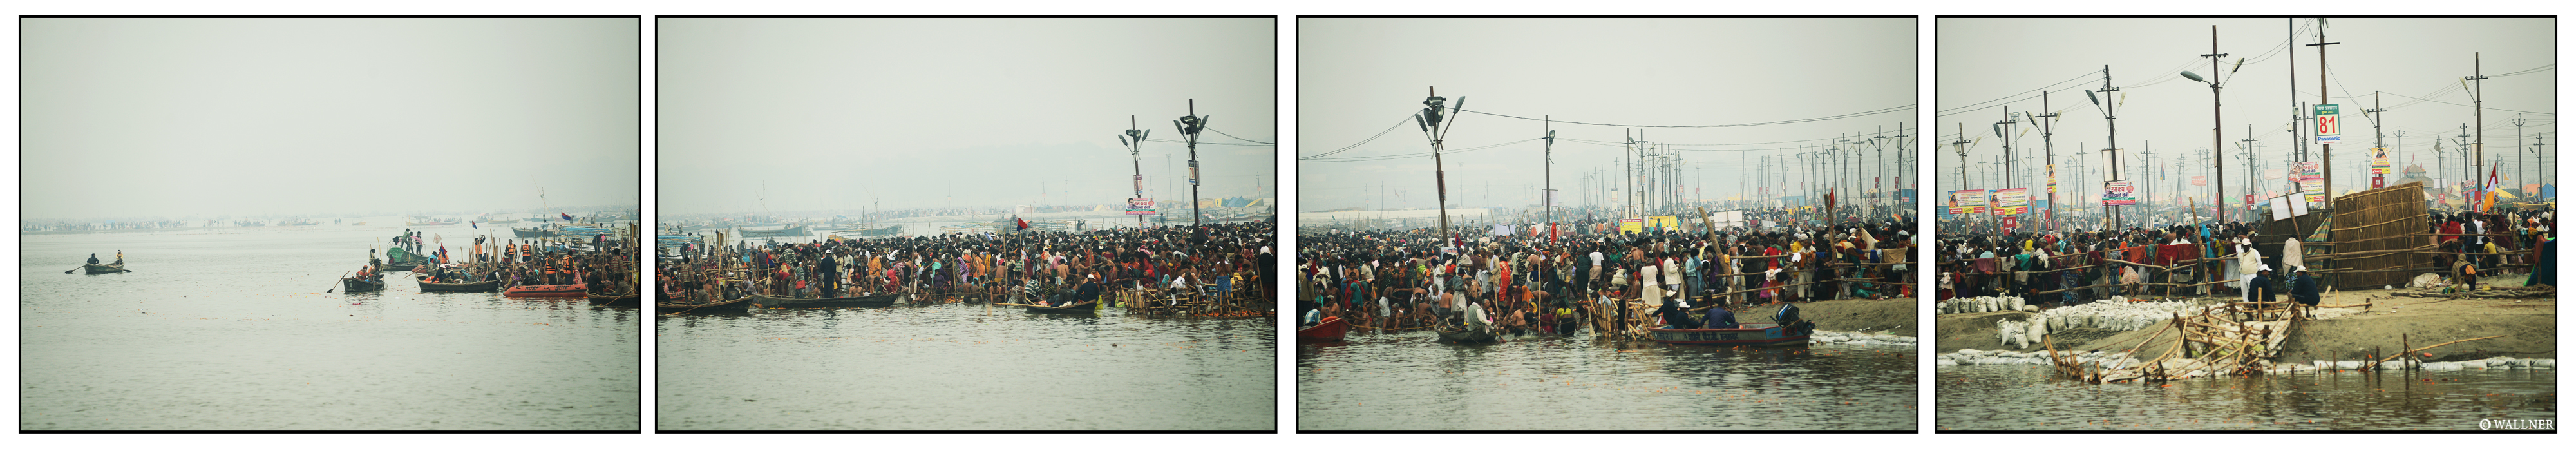 DigitalPatrikWallner_KumbhMela_The Ganges LOWQ 1000P